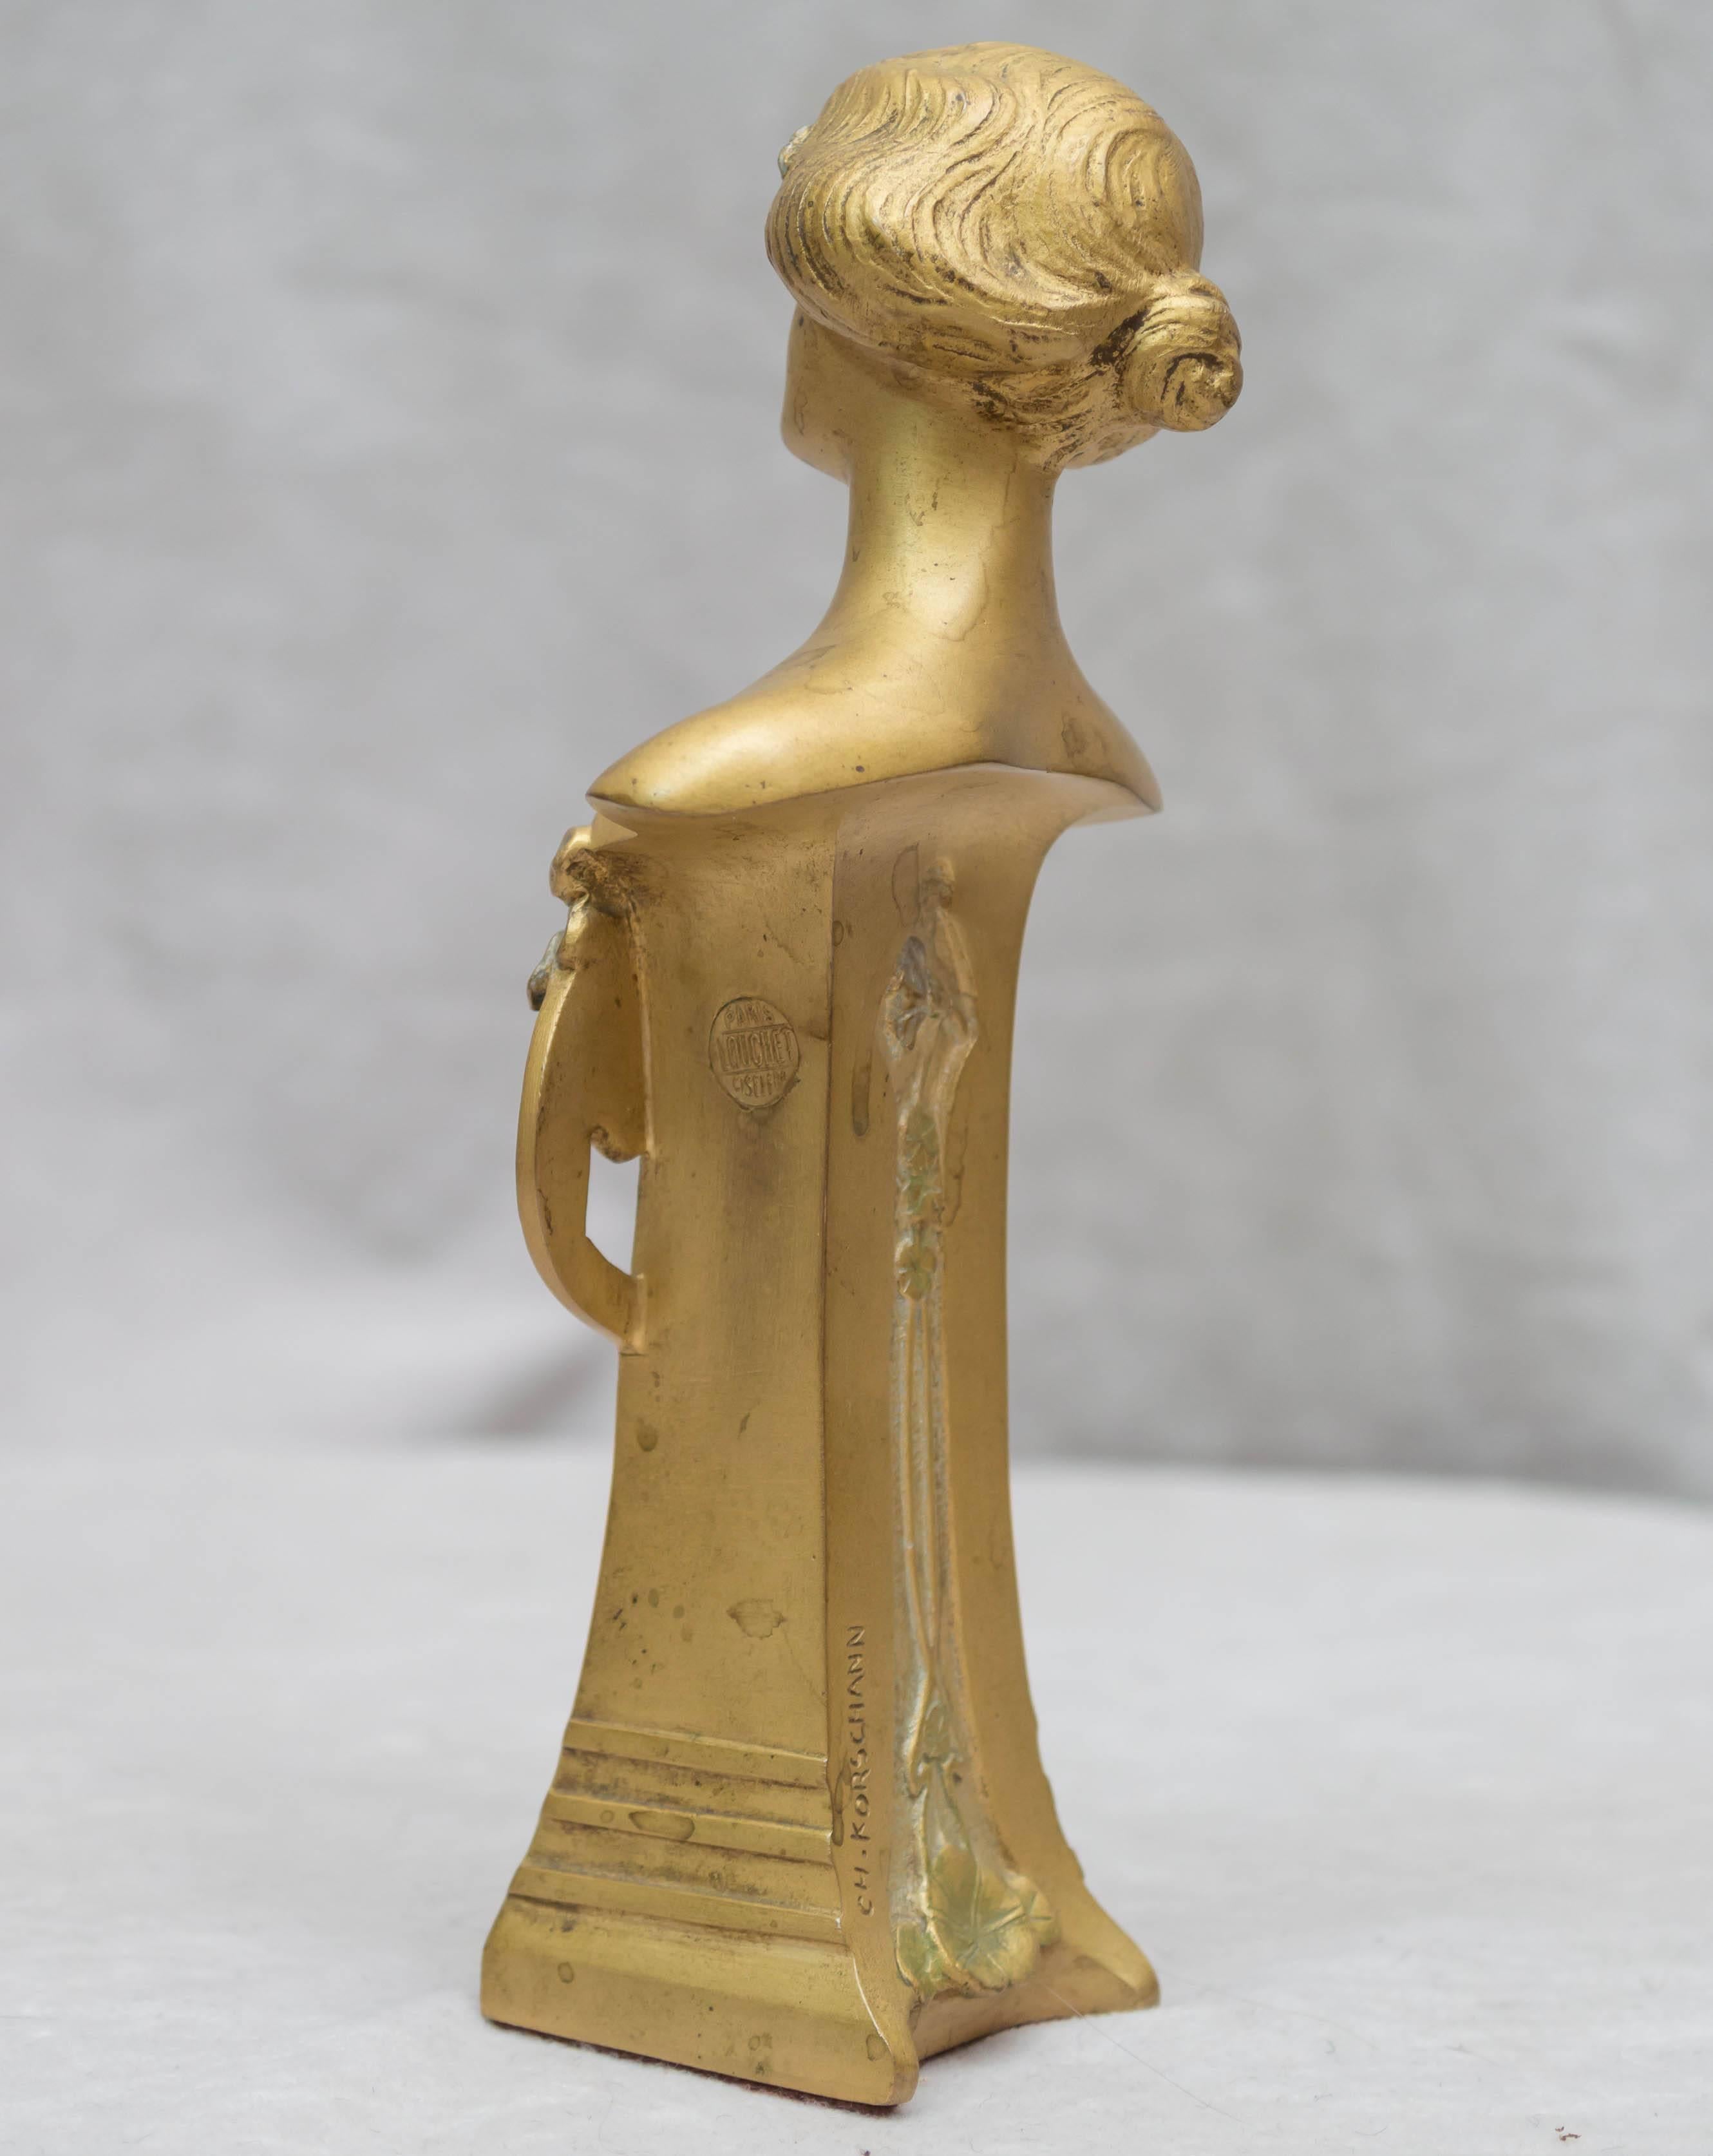 20th Century Art Nouveau/ Vienna Secessionist Gilt Bronze Bust, Charles Korschann